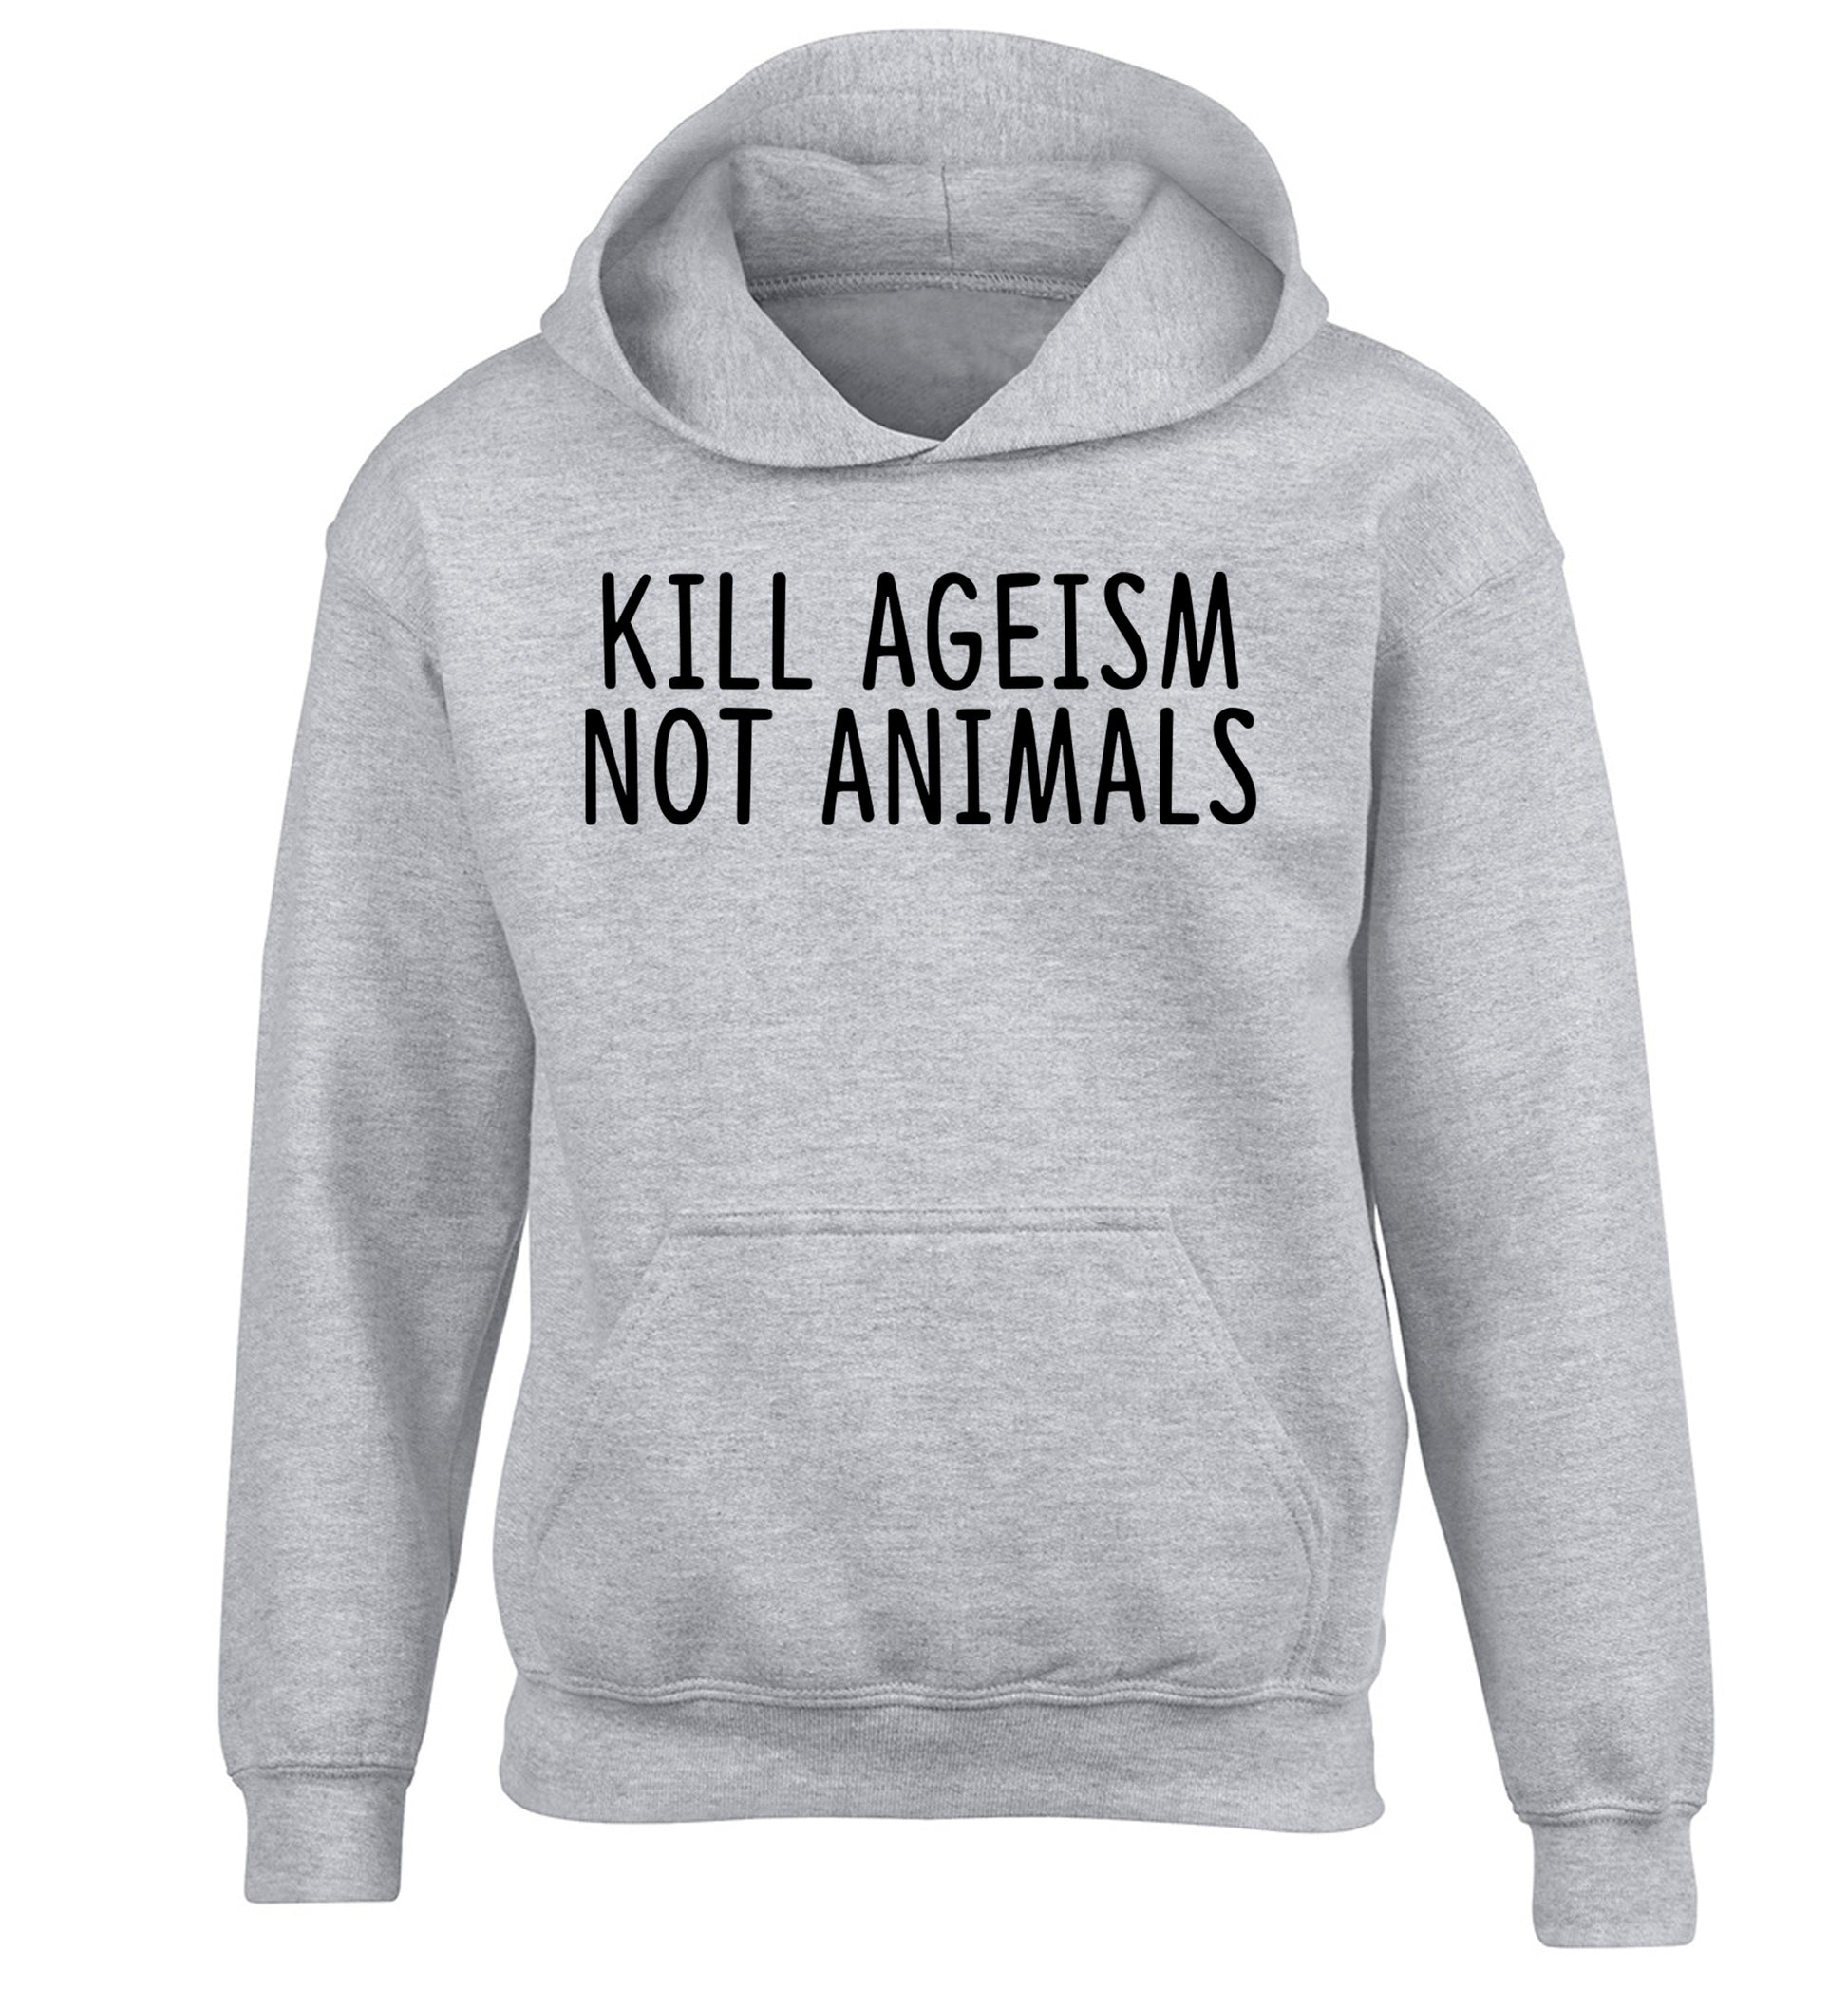 Kill Ageism Not Animals children's grey hoodie 12-13 Years